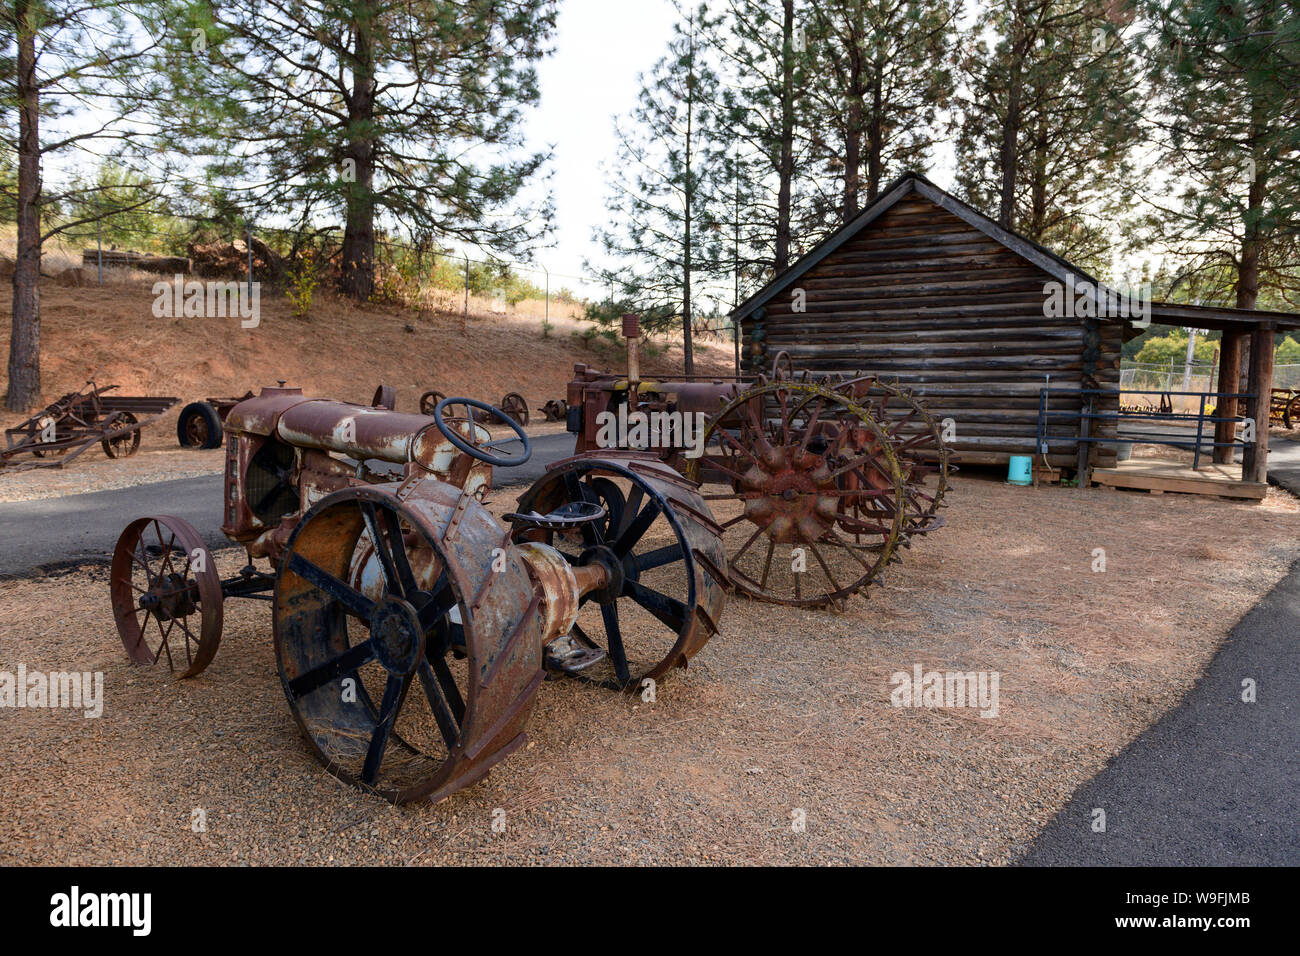 Historical farm equipment at Larsen apple ranch in Applehill, California along highway 50 in the sierra foothills. Stock Photo